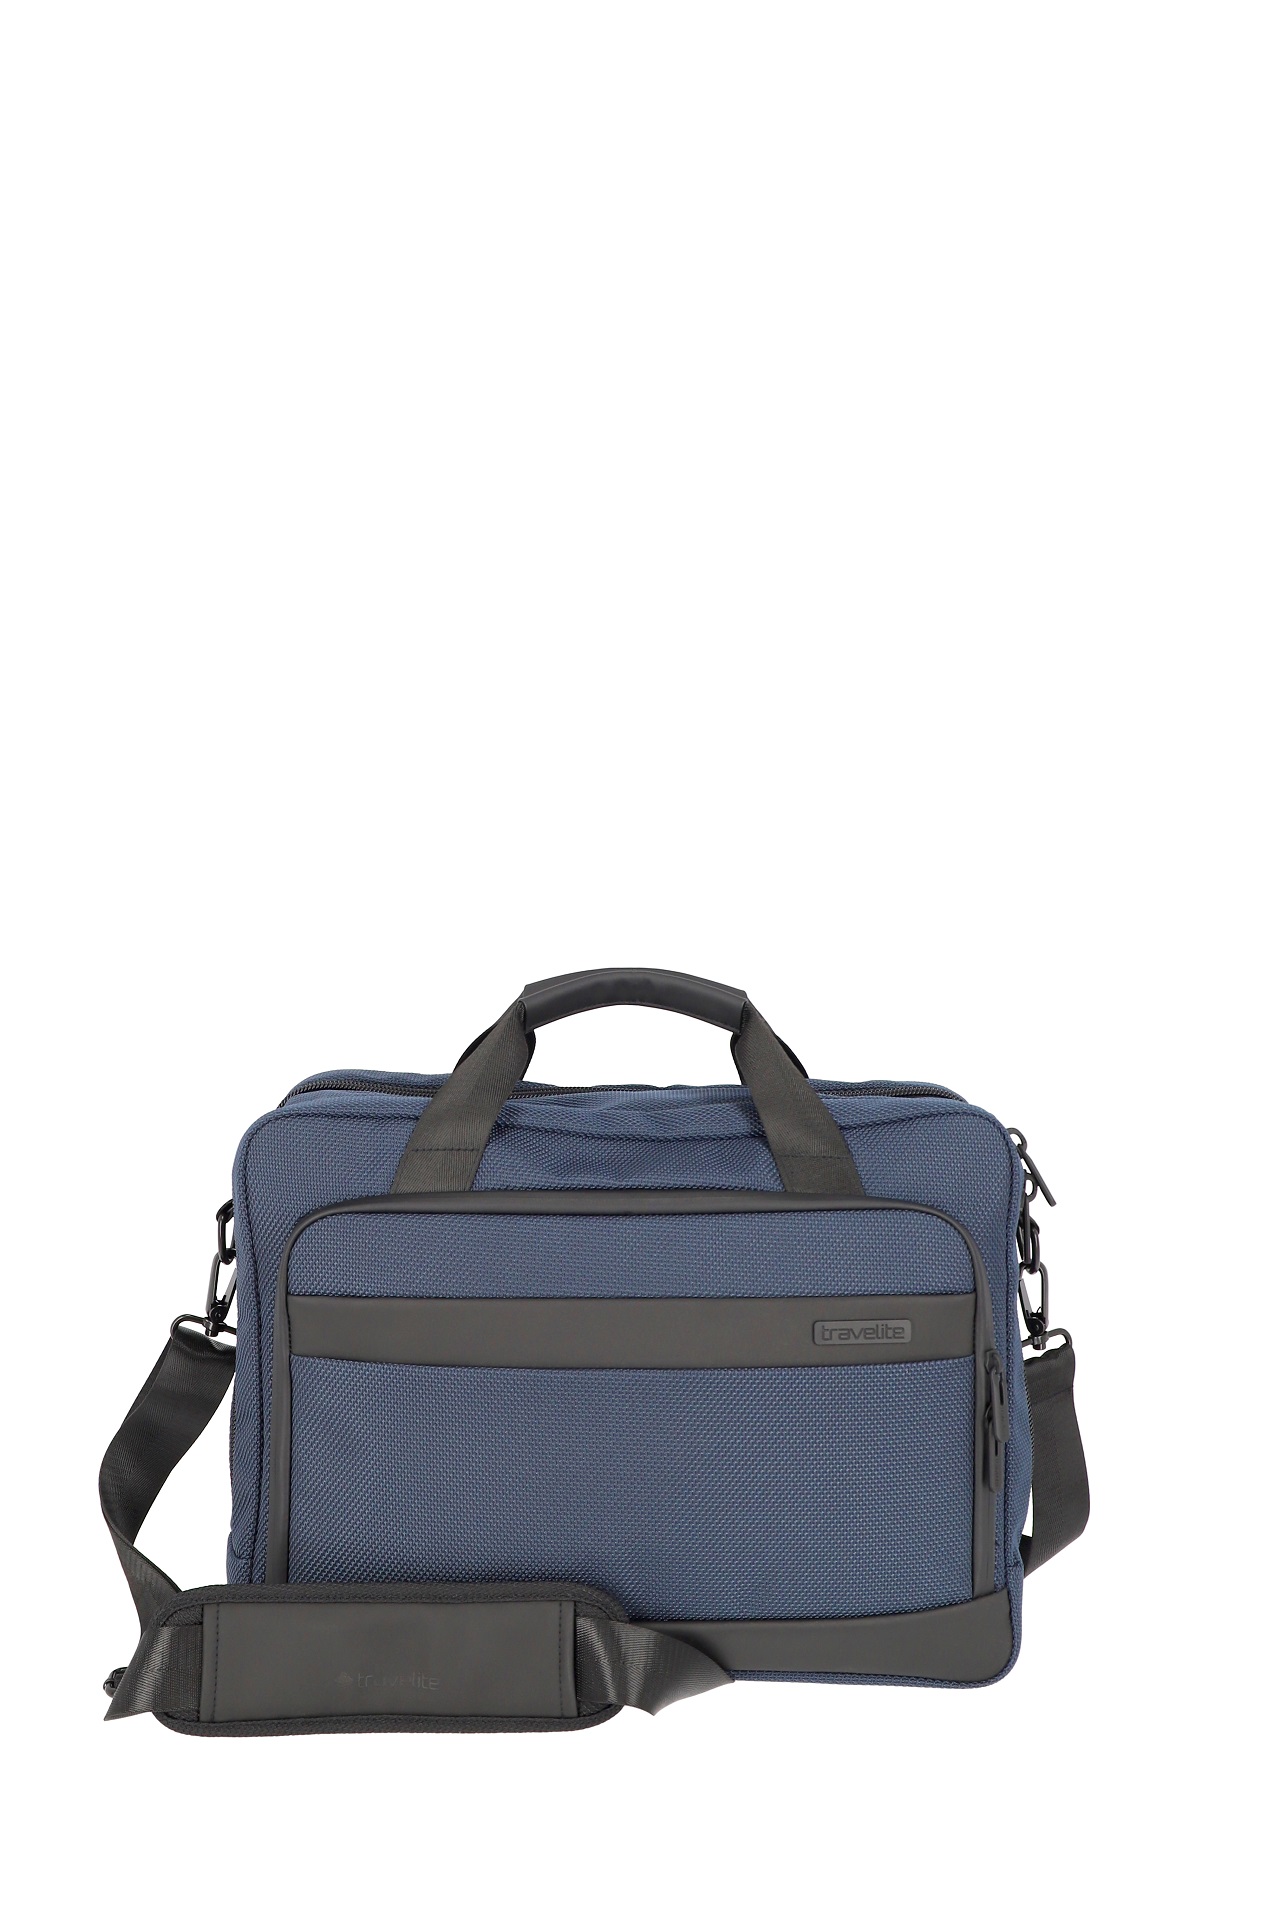 E-shop Travelite Meet Laptop Bag Navy